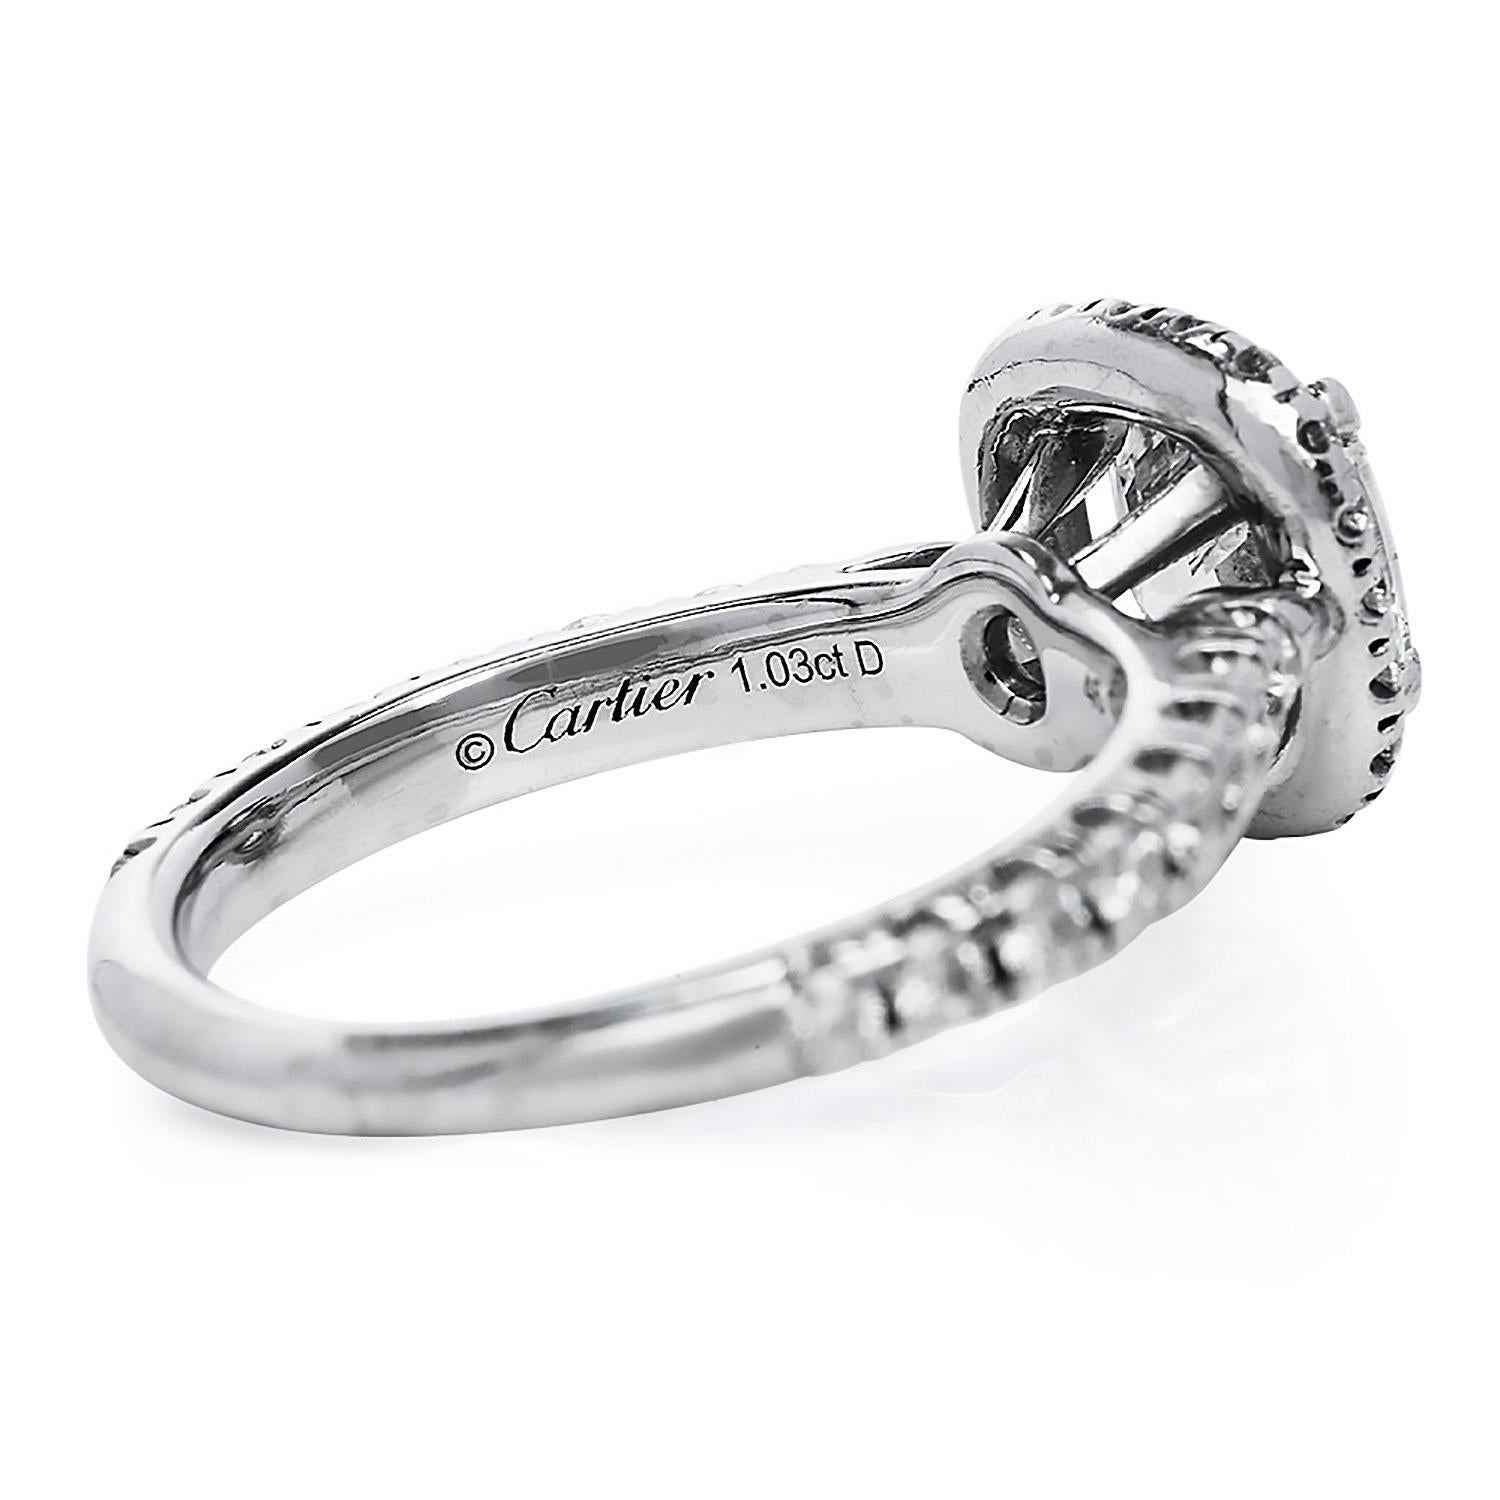 Cartier GIA zertifiziert F VVS Kissenschliff Diamant Platin Halo Verlobungsringthis Cl im Angebot 5